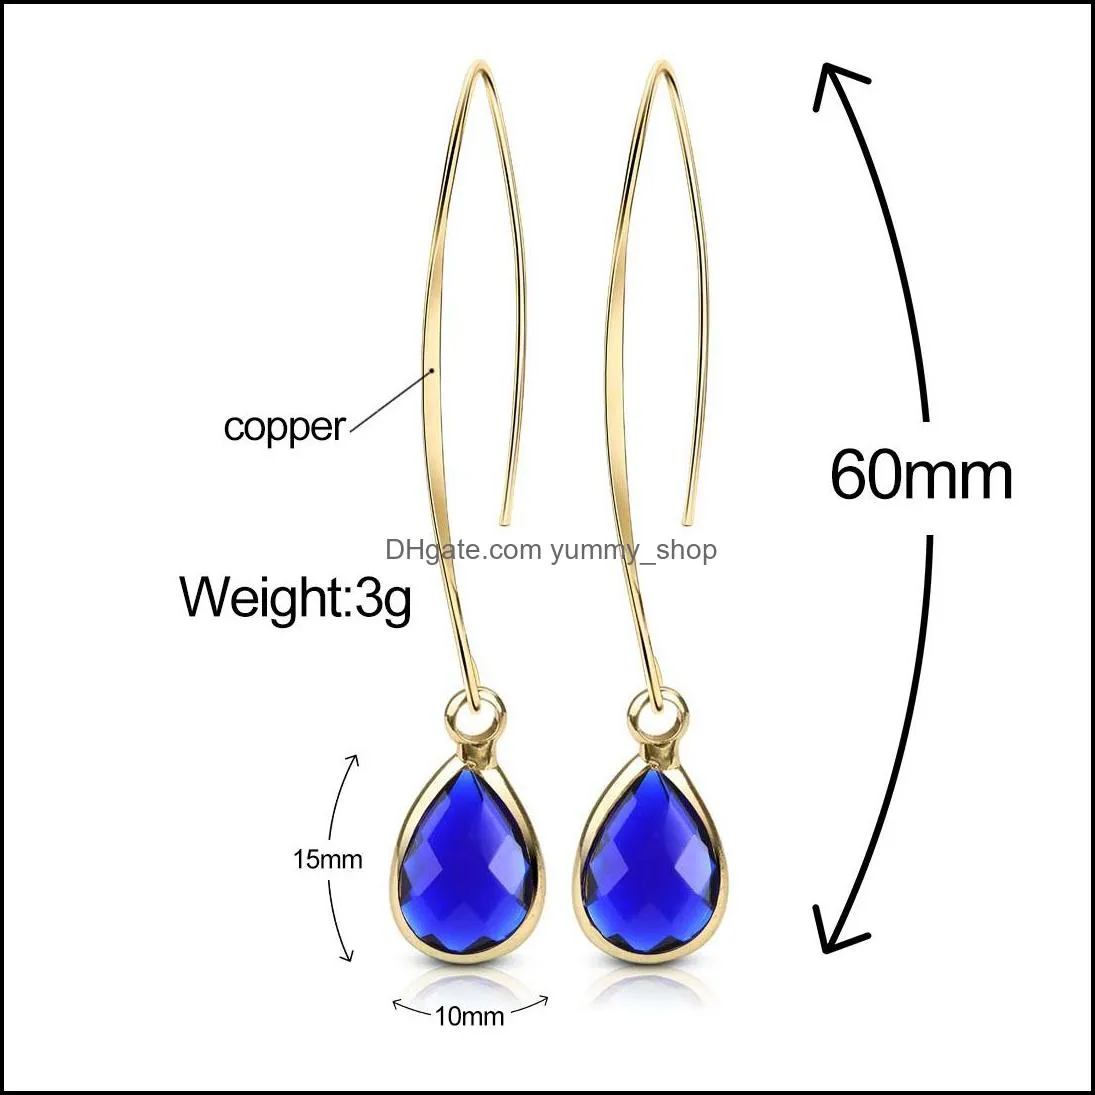 2021 teardrop crystal dangle earrings for women girls charm fashion gold color pink waterdrop long earring bridesmaid jewelry